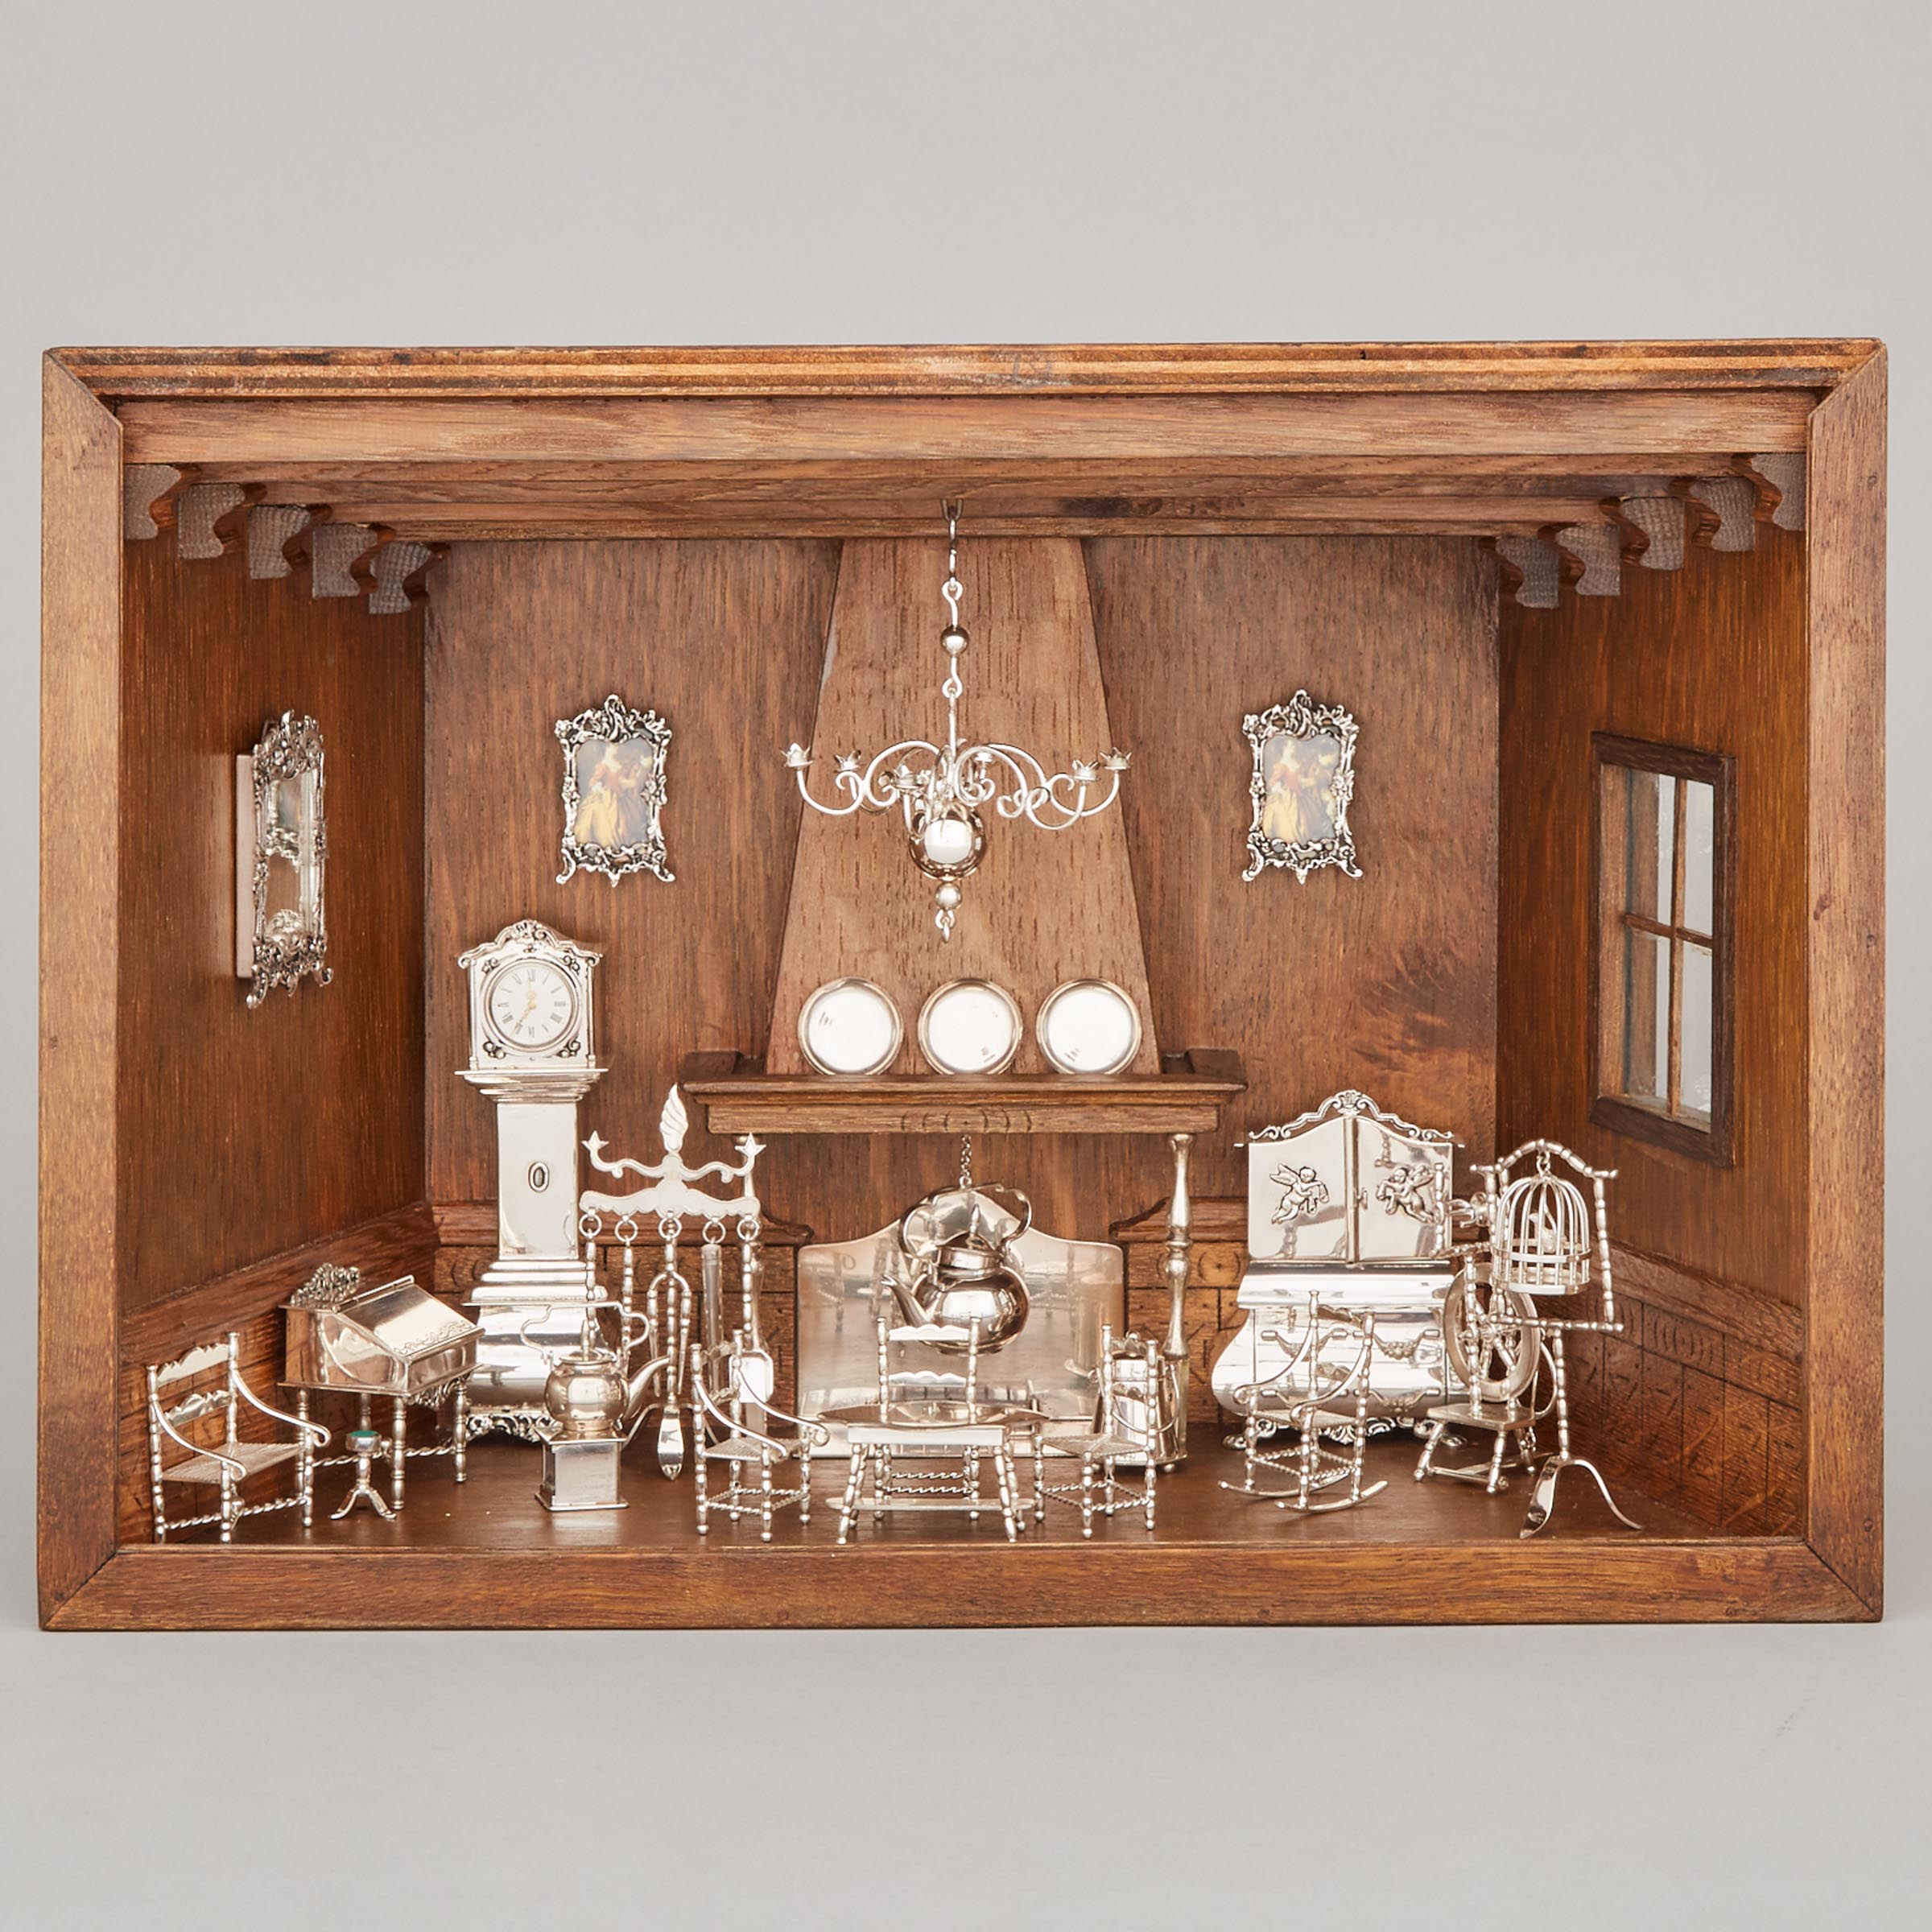 Dutch Silver Miniature Living Room Diorama, H. Hooykaas, Schoonhoven, 20th century